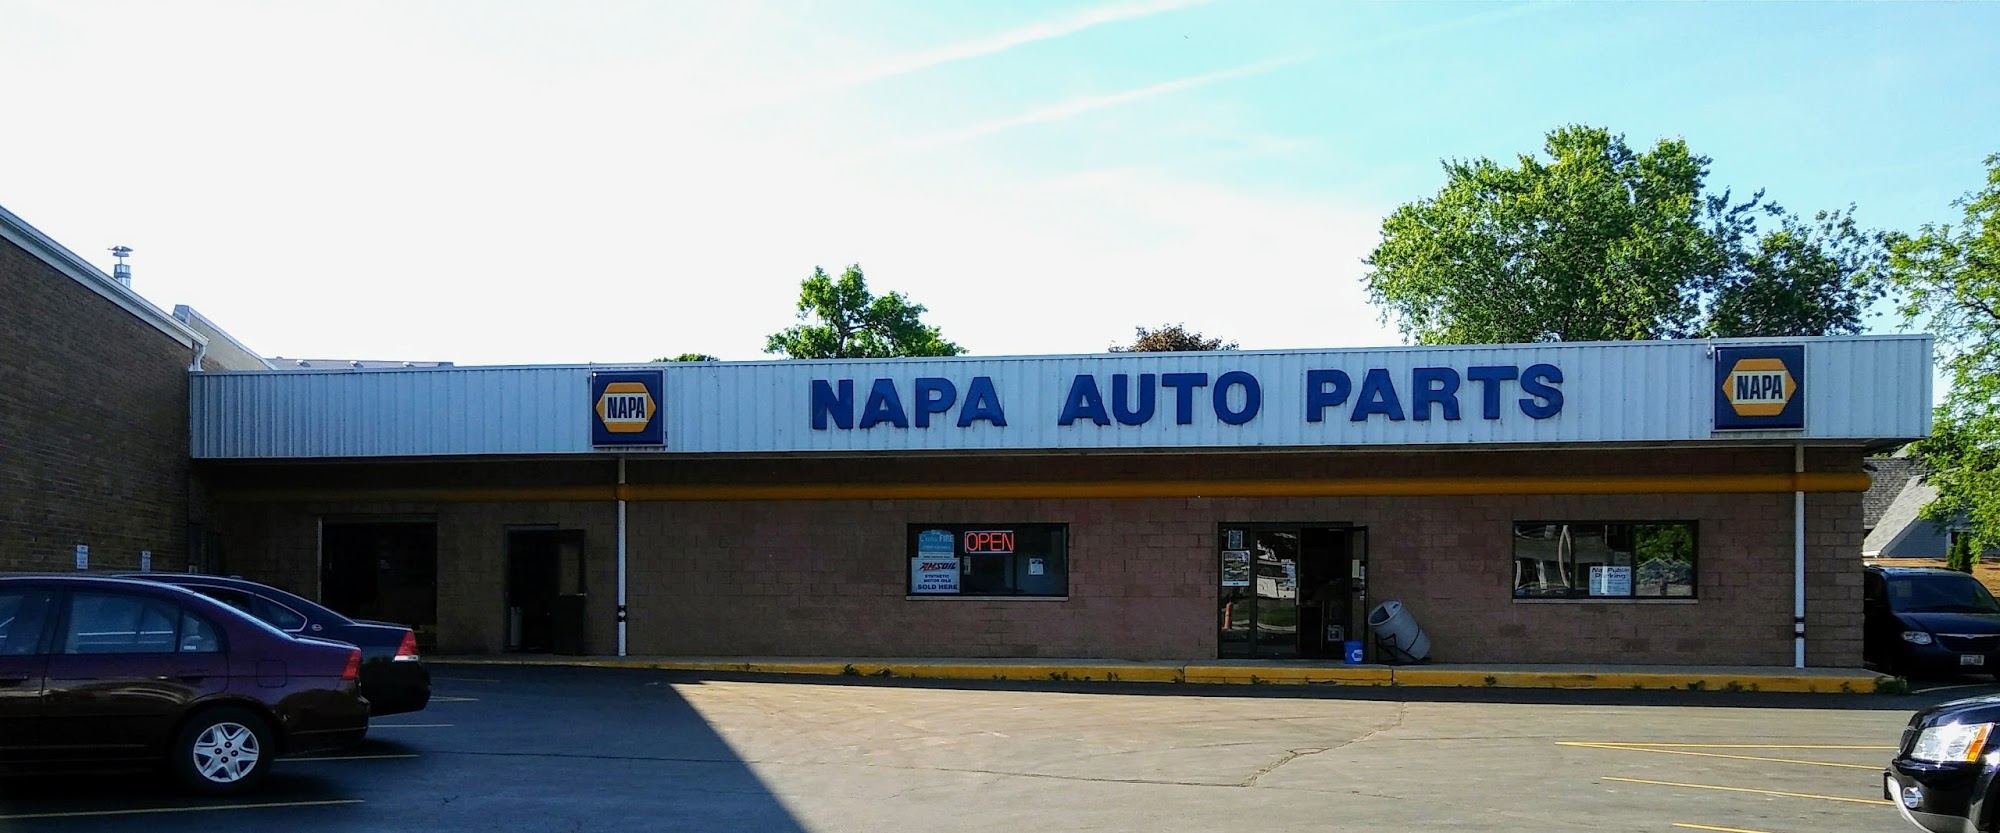 NAPA Auto Parts - Falls Auto Parts and Supplies Inc.